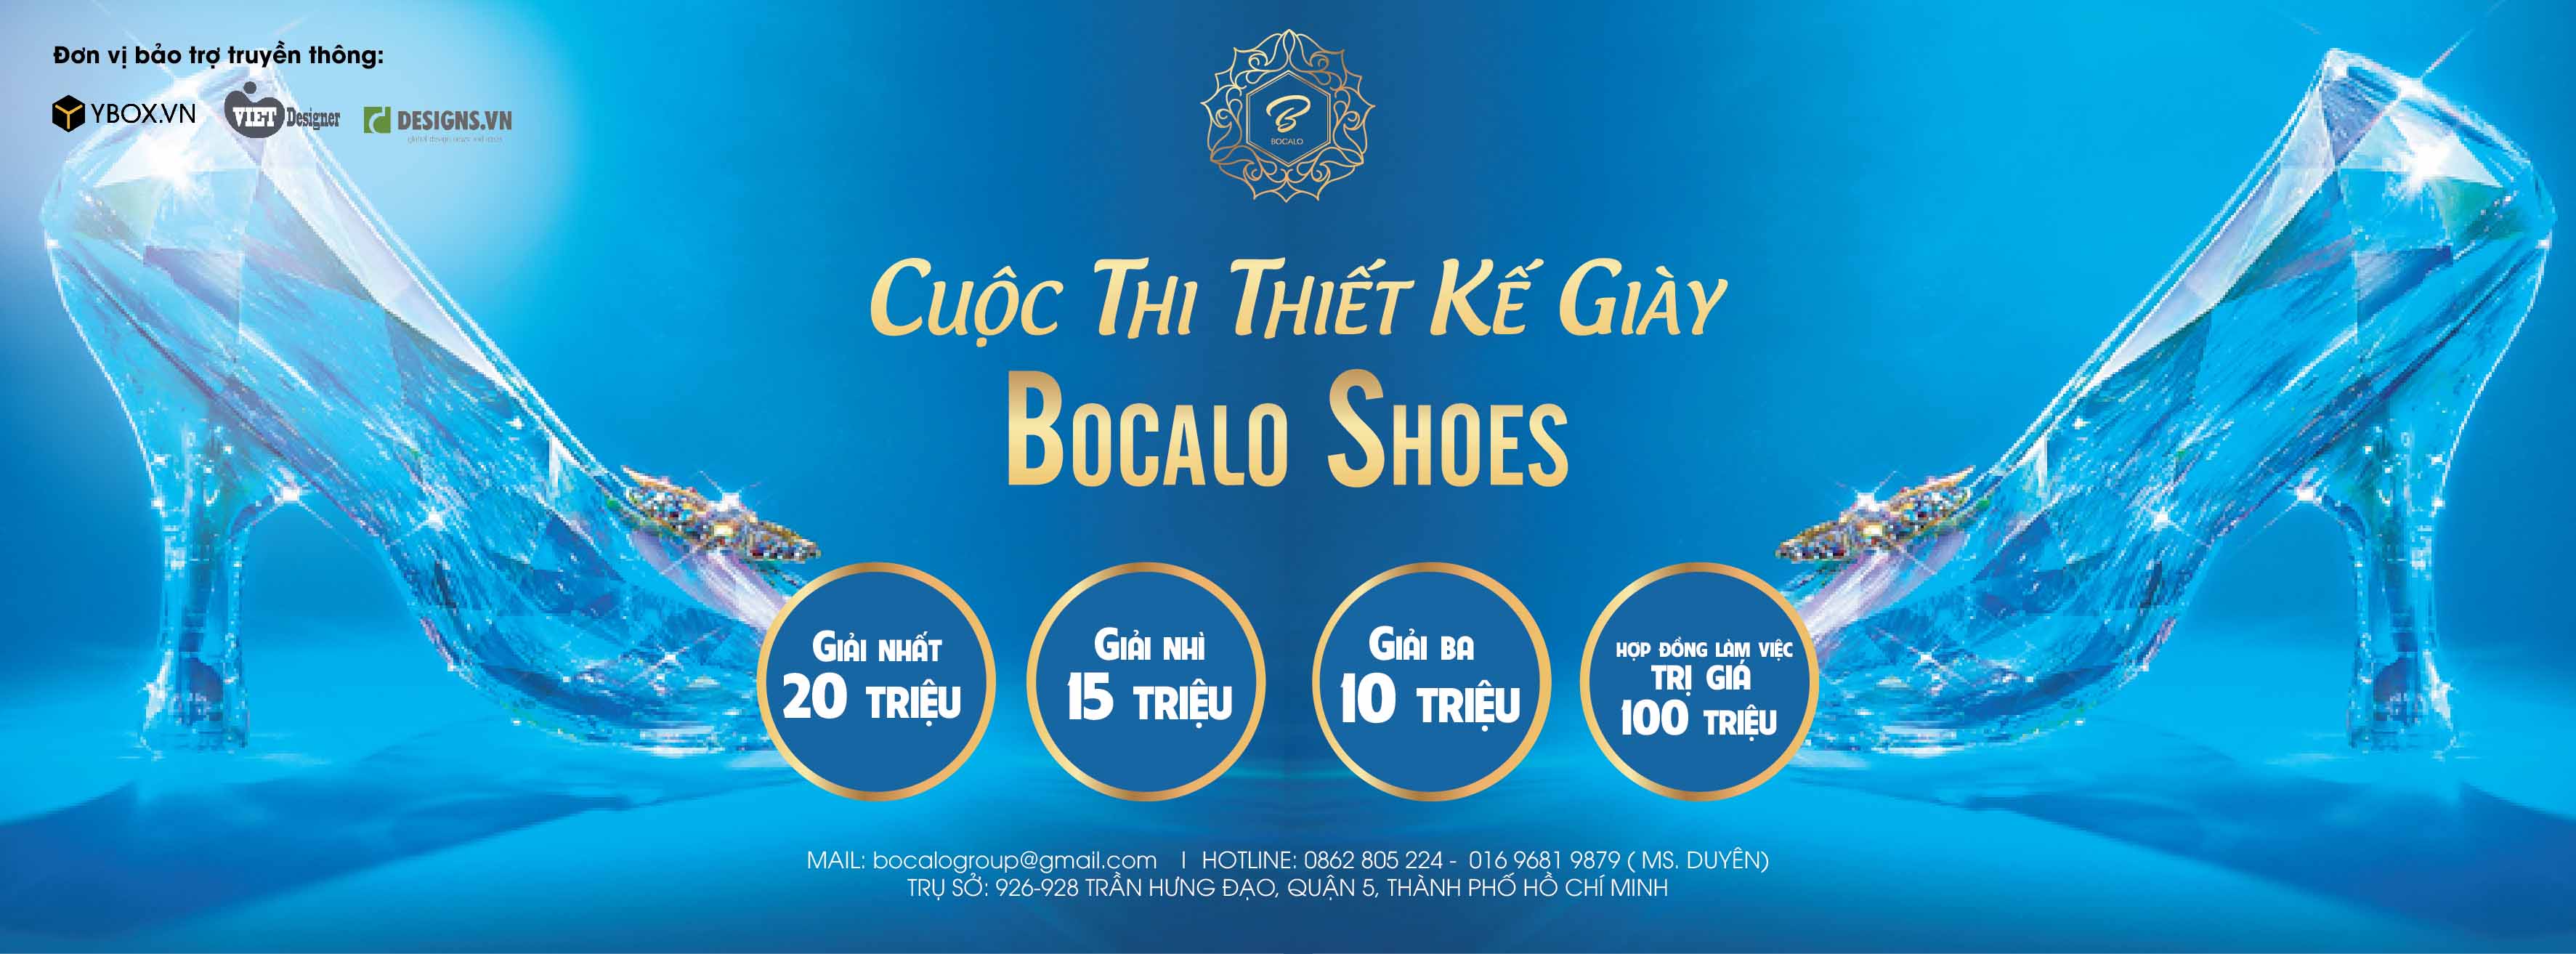 cuoc-thi-thiet-ke-giay-bocalo-shoes-2017